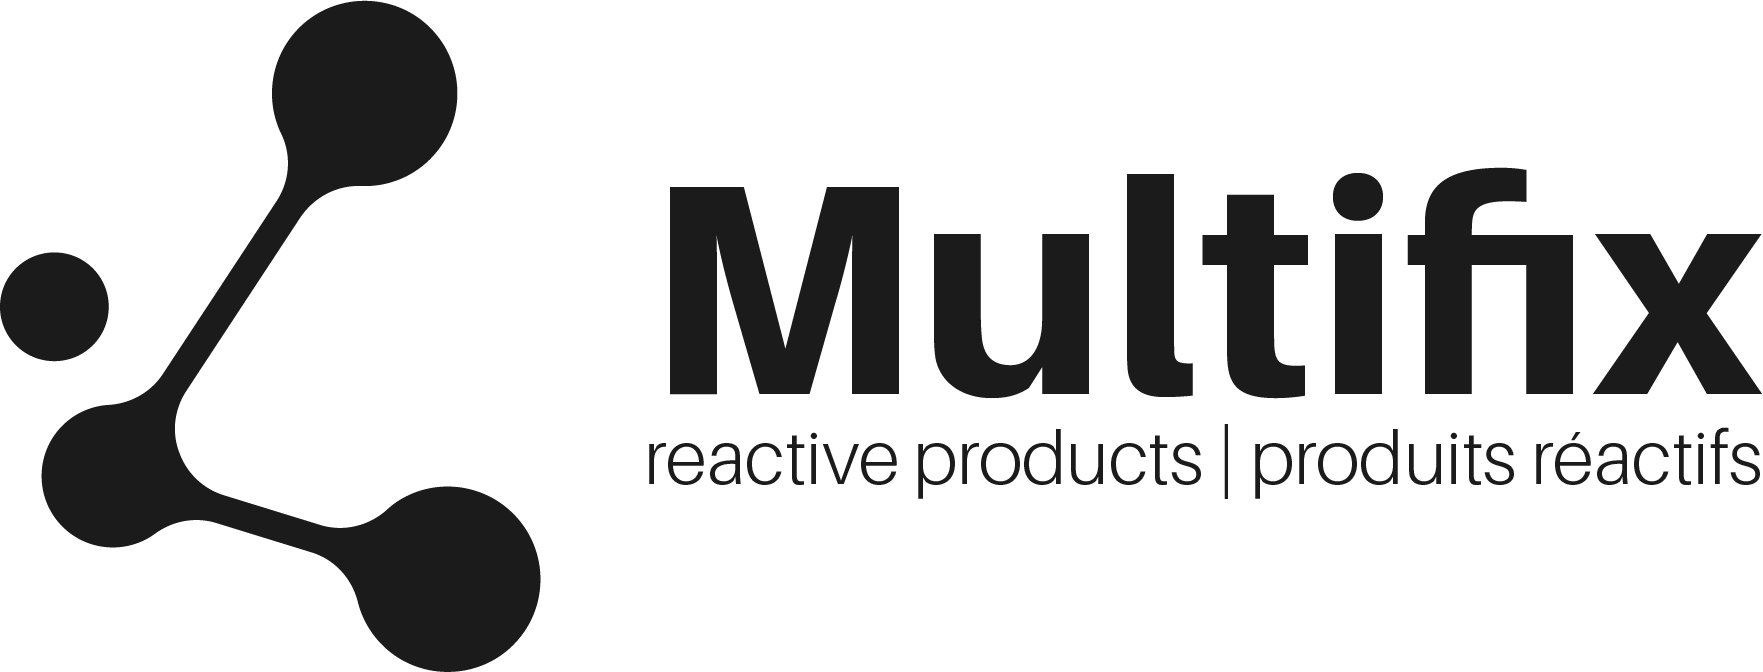 multifix-logo-bilingue